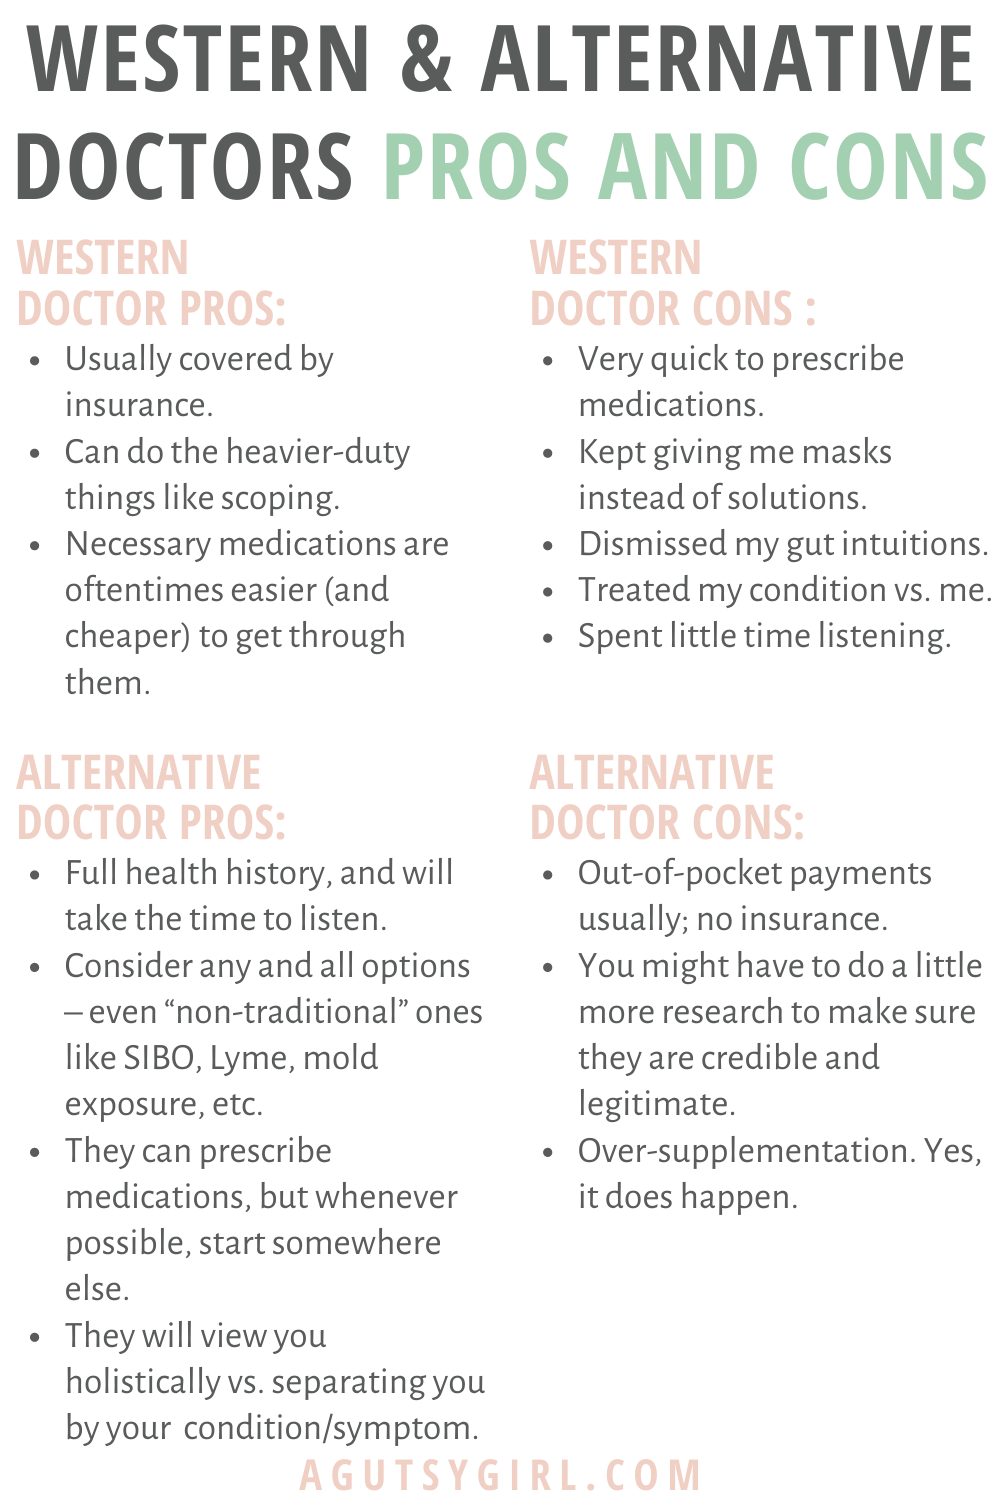 Beginner's Guide to Digestive Health Testing agutsygirl.com #guthealth #digestivehealth #medicine western vs alternative doctors